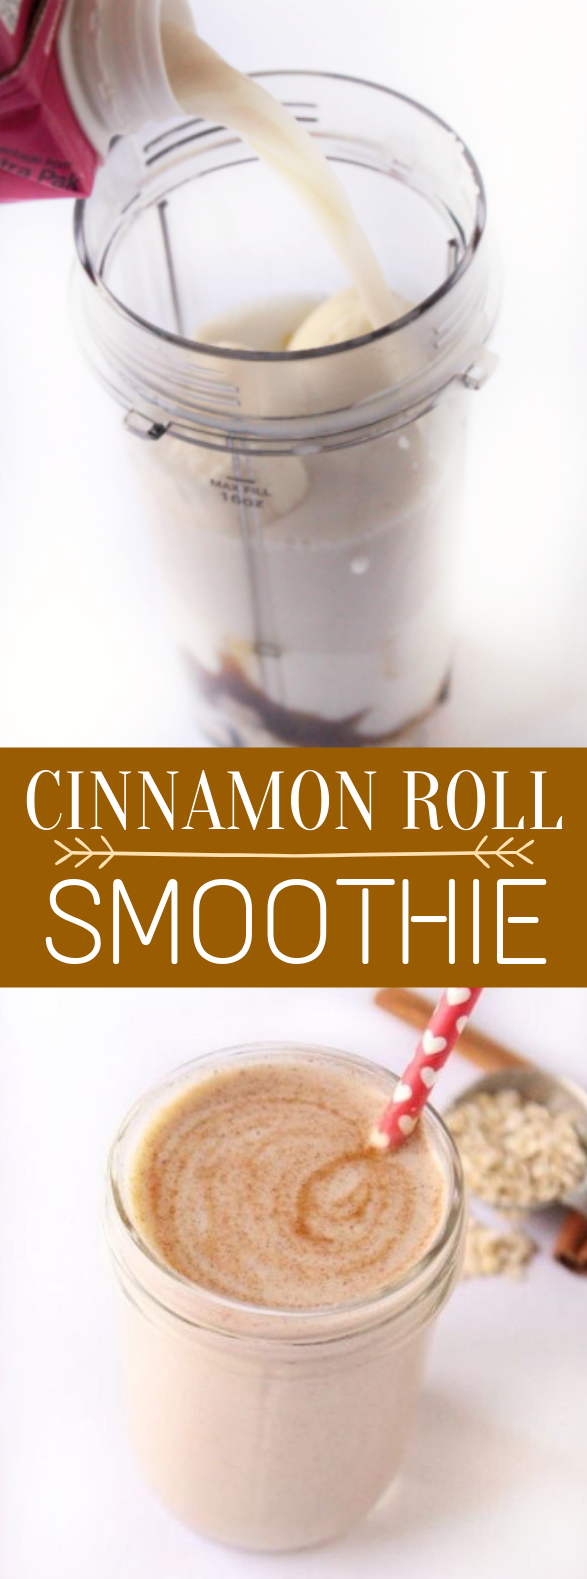 Cinnamon Roll Smoothie #drinks #breakfast